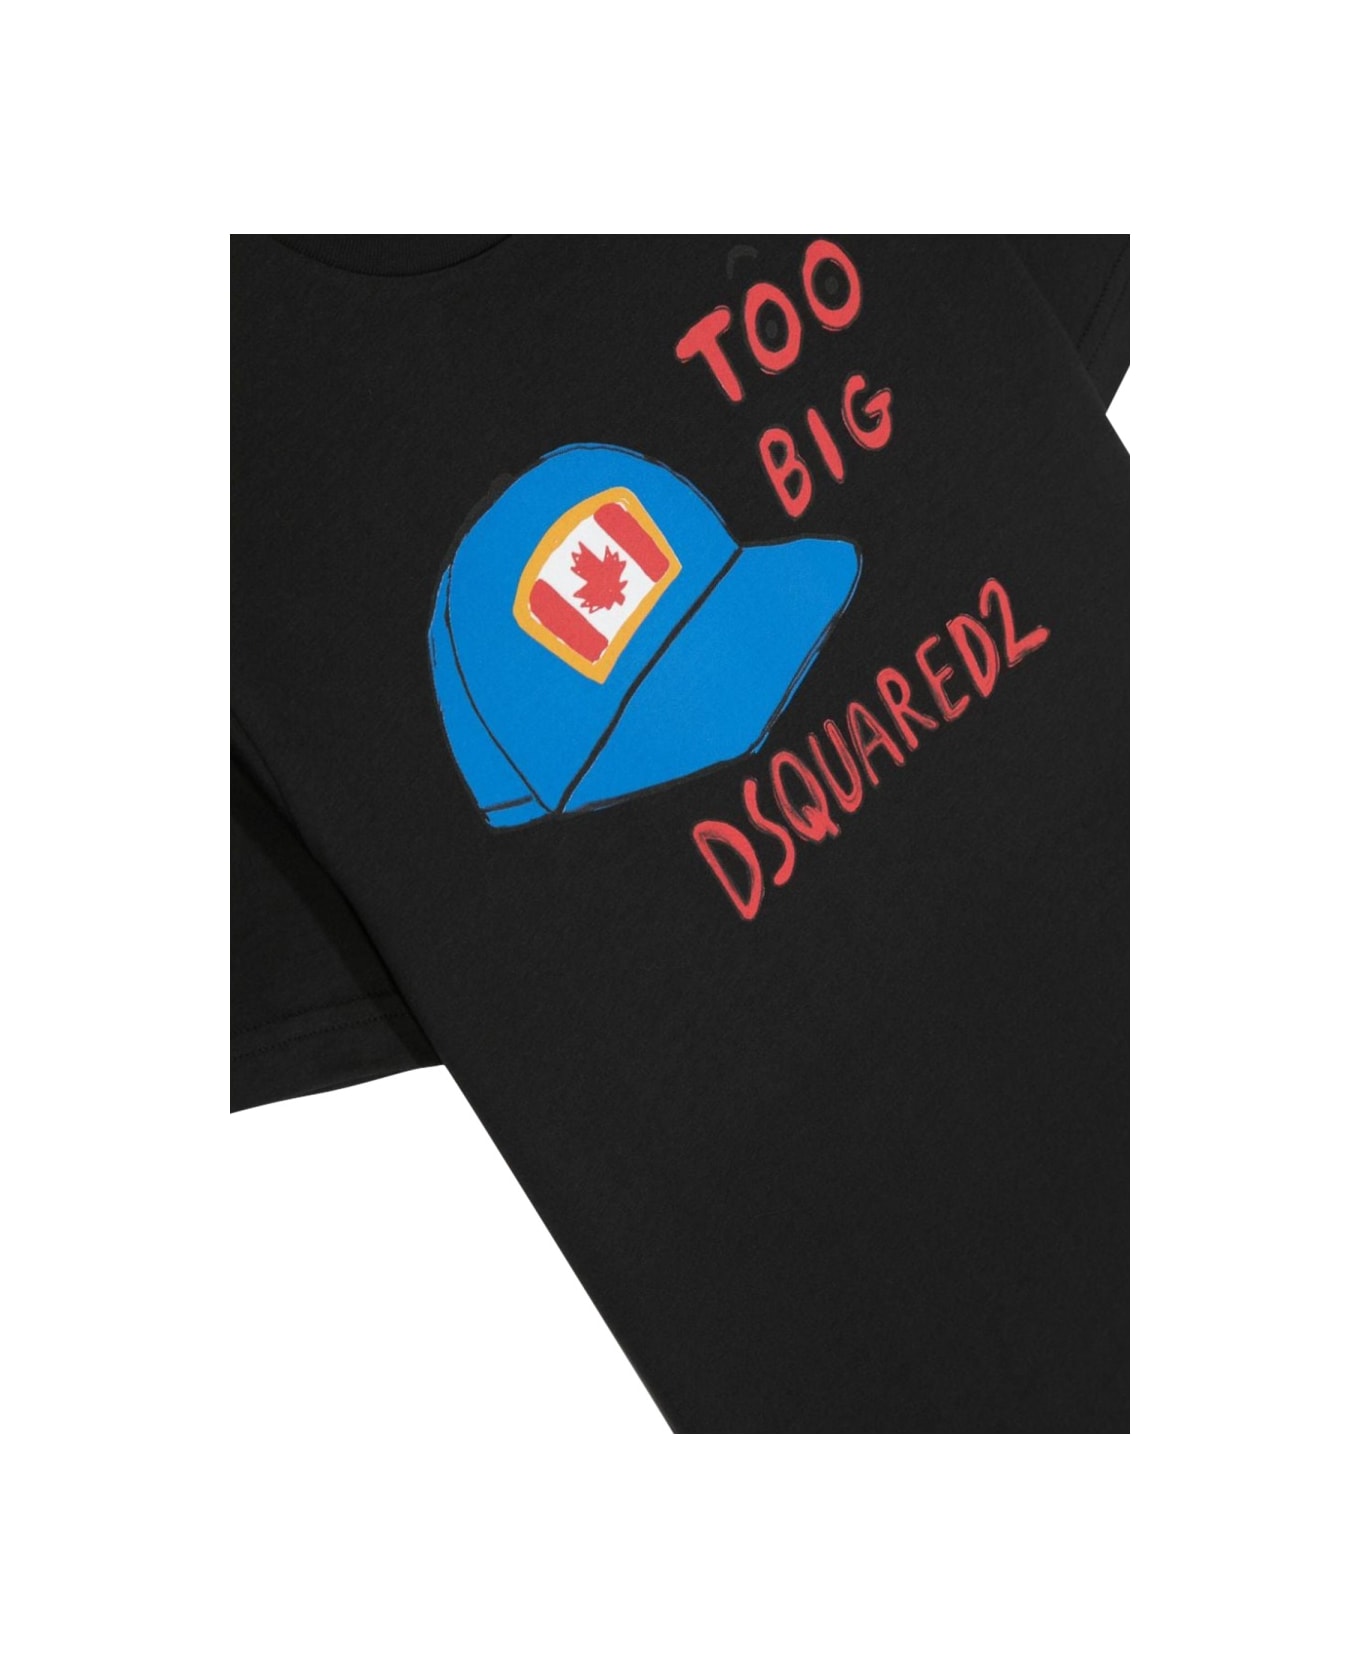 Dsquared2 Hat Print T-shirt - BLACK Tシャツ＆ポロシャツ